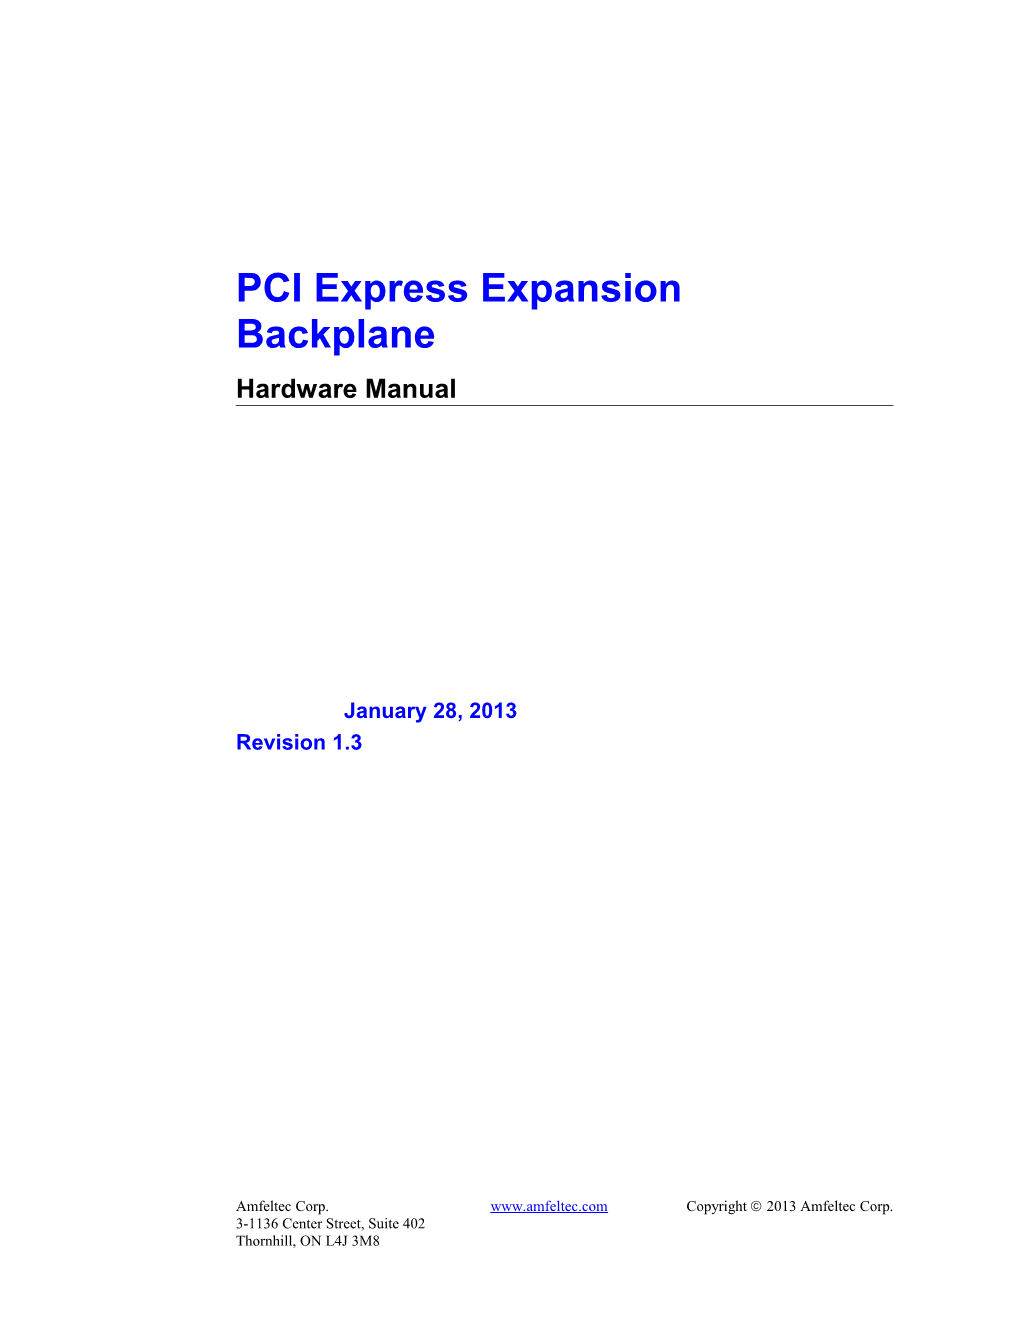 PCI Express Expansion Backplane